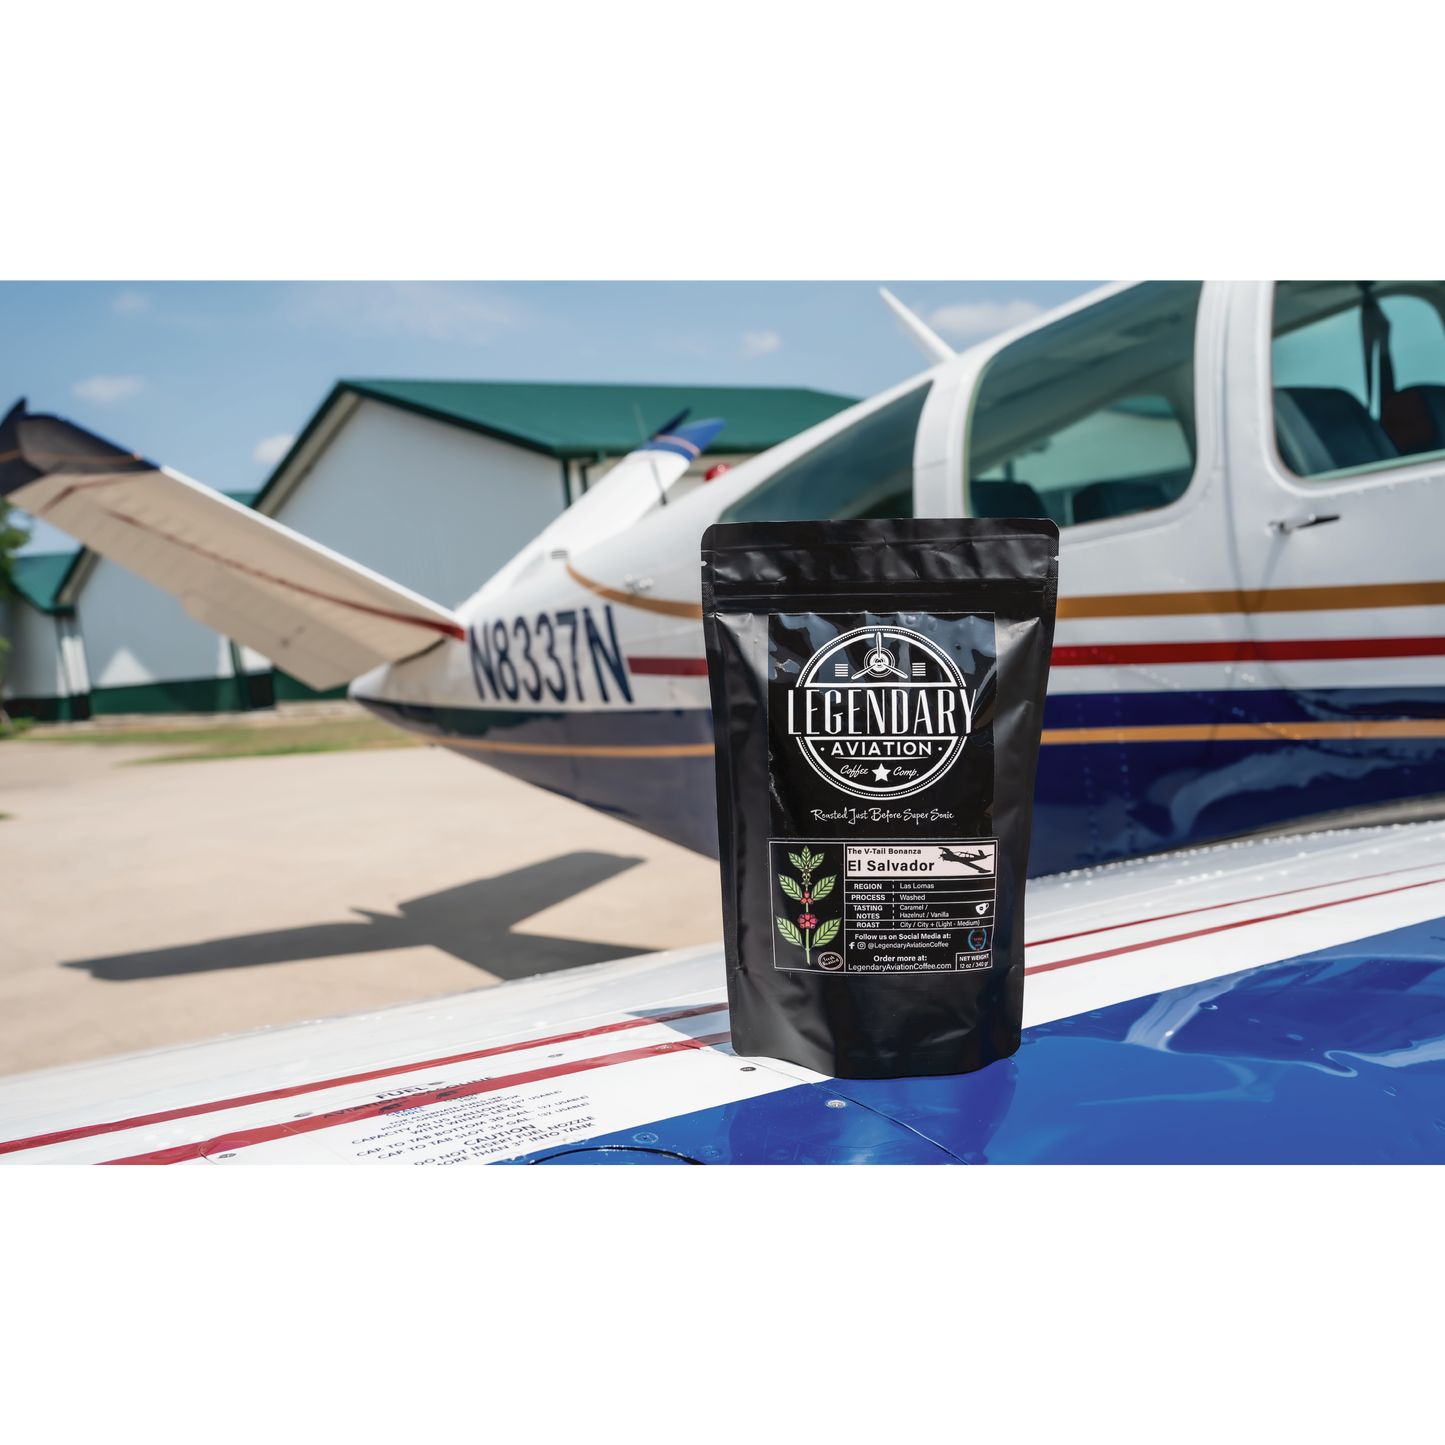 Legendary Aviation Specialty Coffee, V-Tail Bonanza, Far Front, Rockwall Coffee